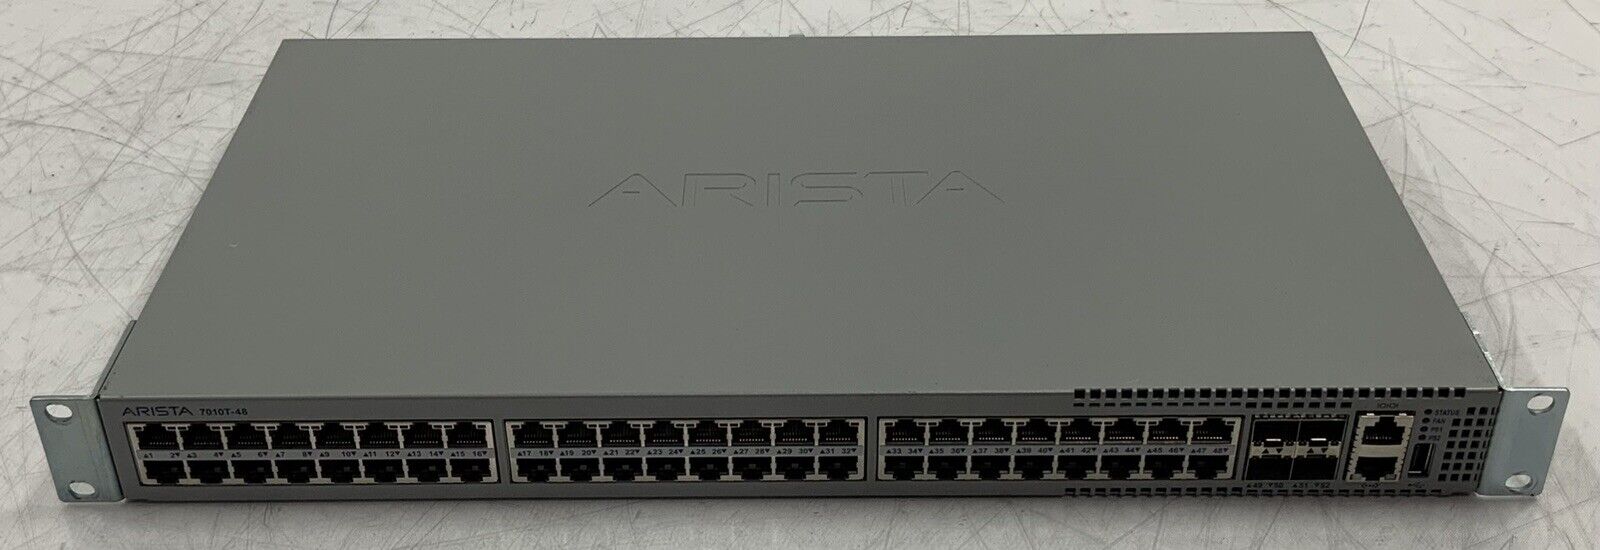 Arista 7010T-48 | DCS-7010T-48 | 4-SFP Slots | Dual PSU | | 48-Port Ethernet